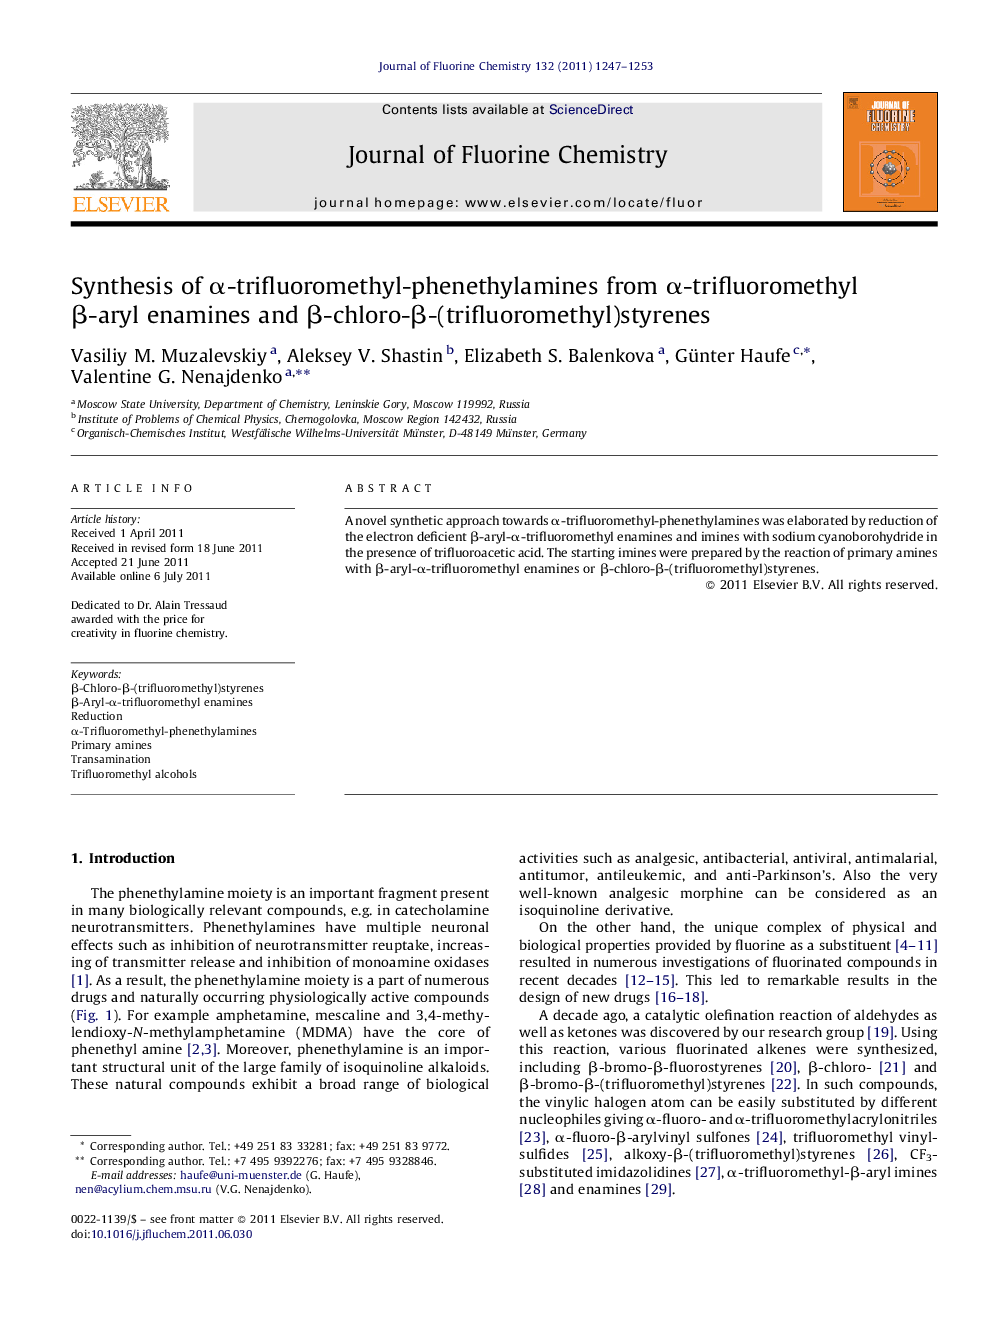 Synthesis of α-trifluoromethyl-phenethylamines from α-trifluoromethyl β-aryl enamines and β-chloro-β-(trifluoromethyl)styrenes